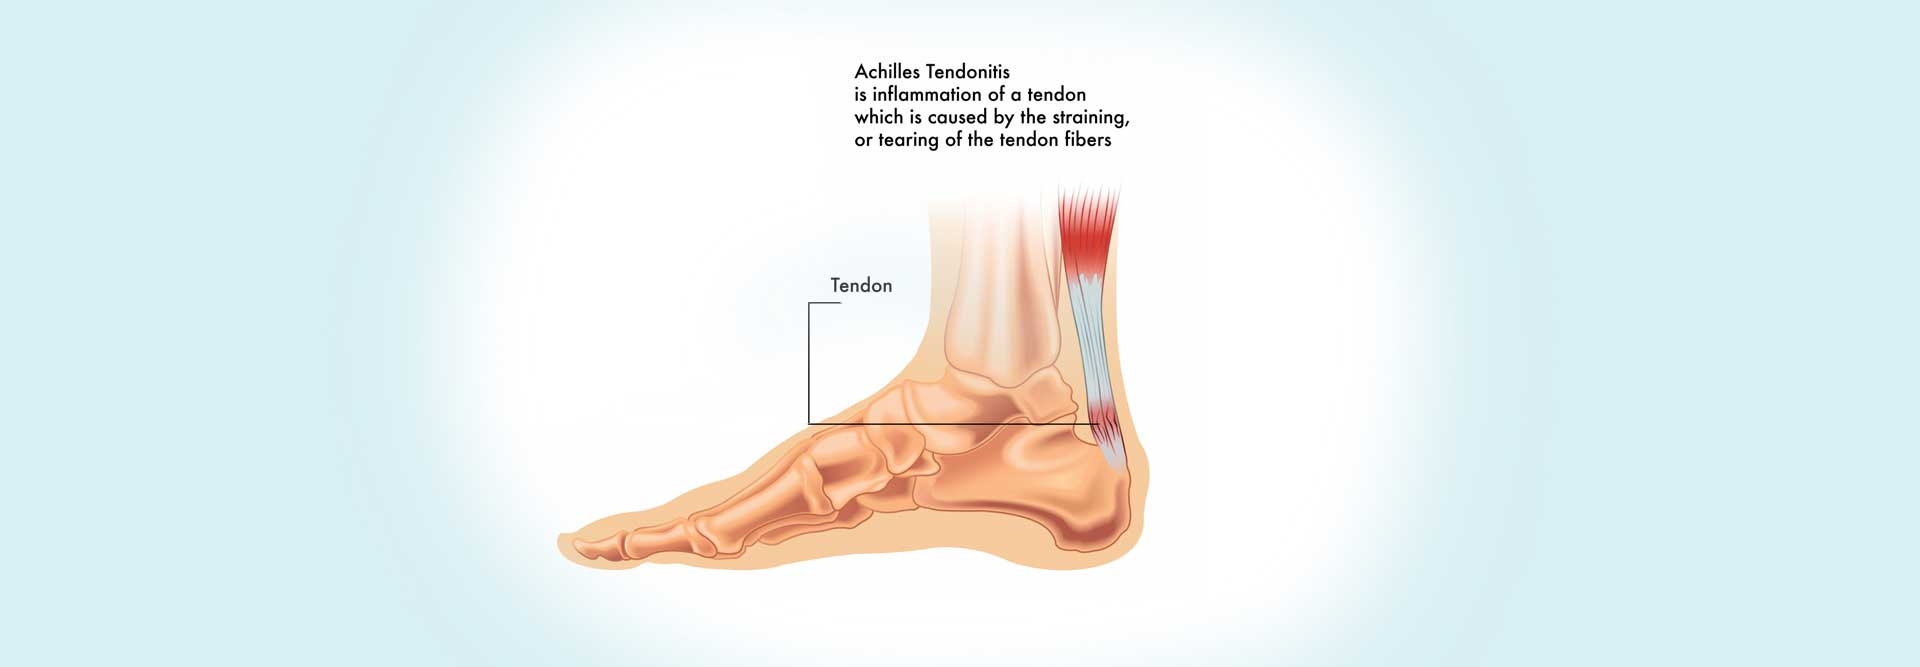 Achilles’ Tendonitis Injury - Cause, Symptoms &amp; Self-Healing Techniques